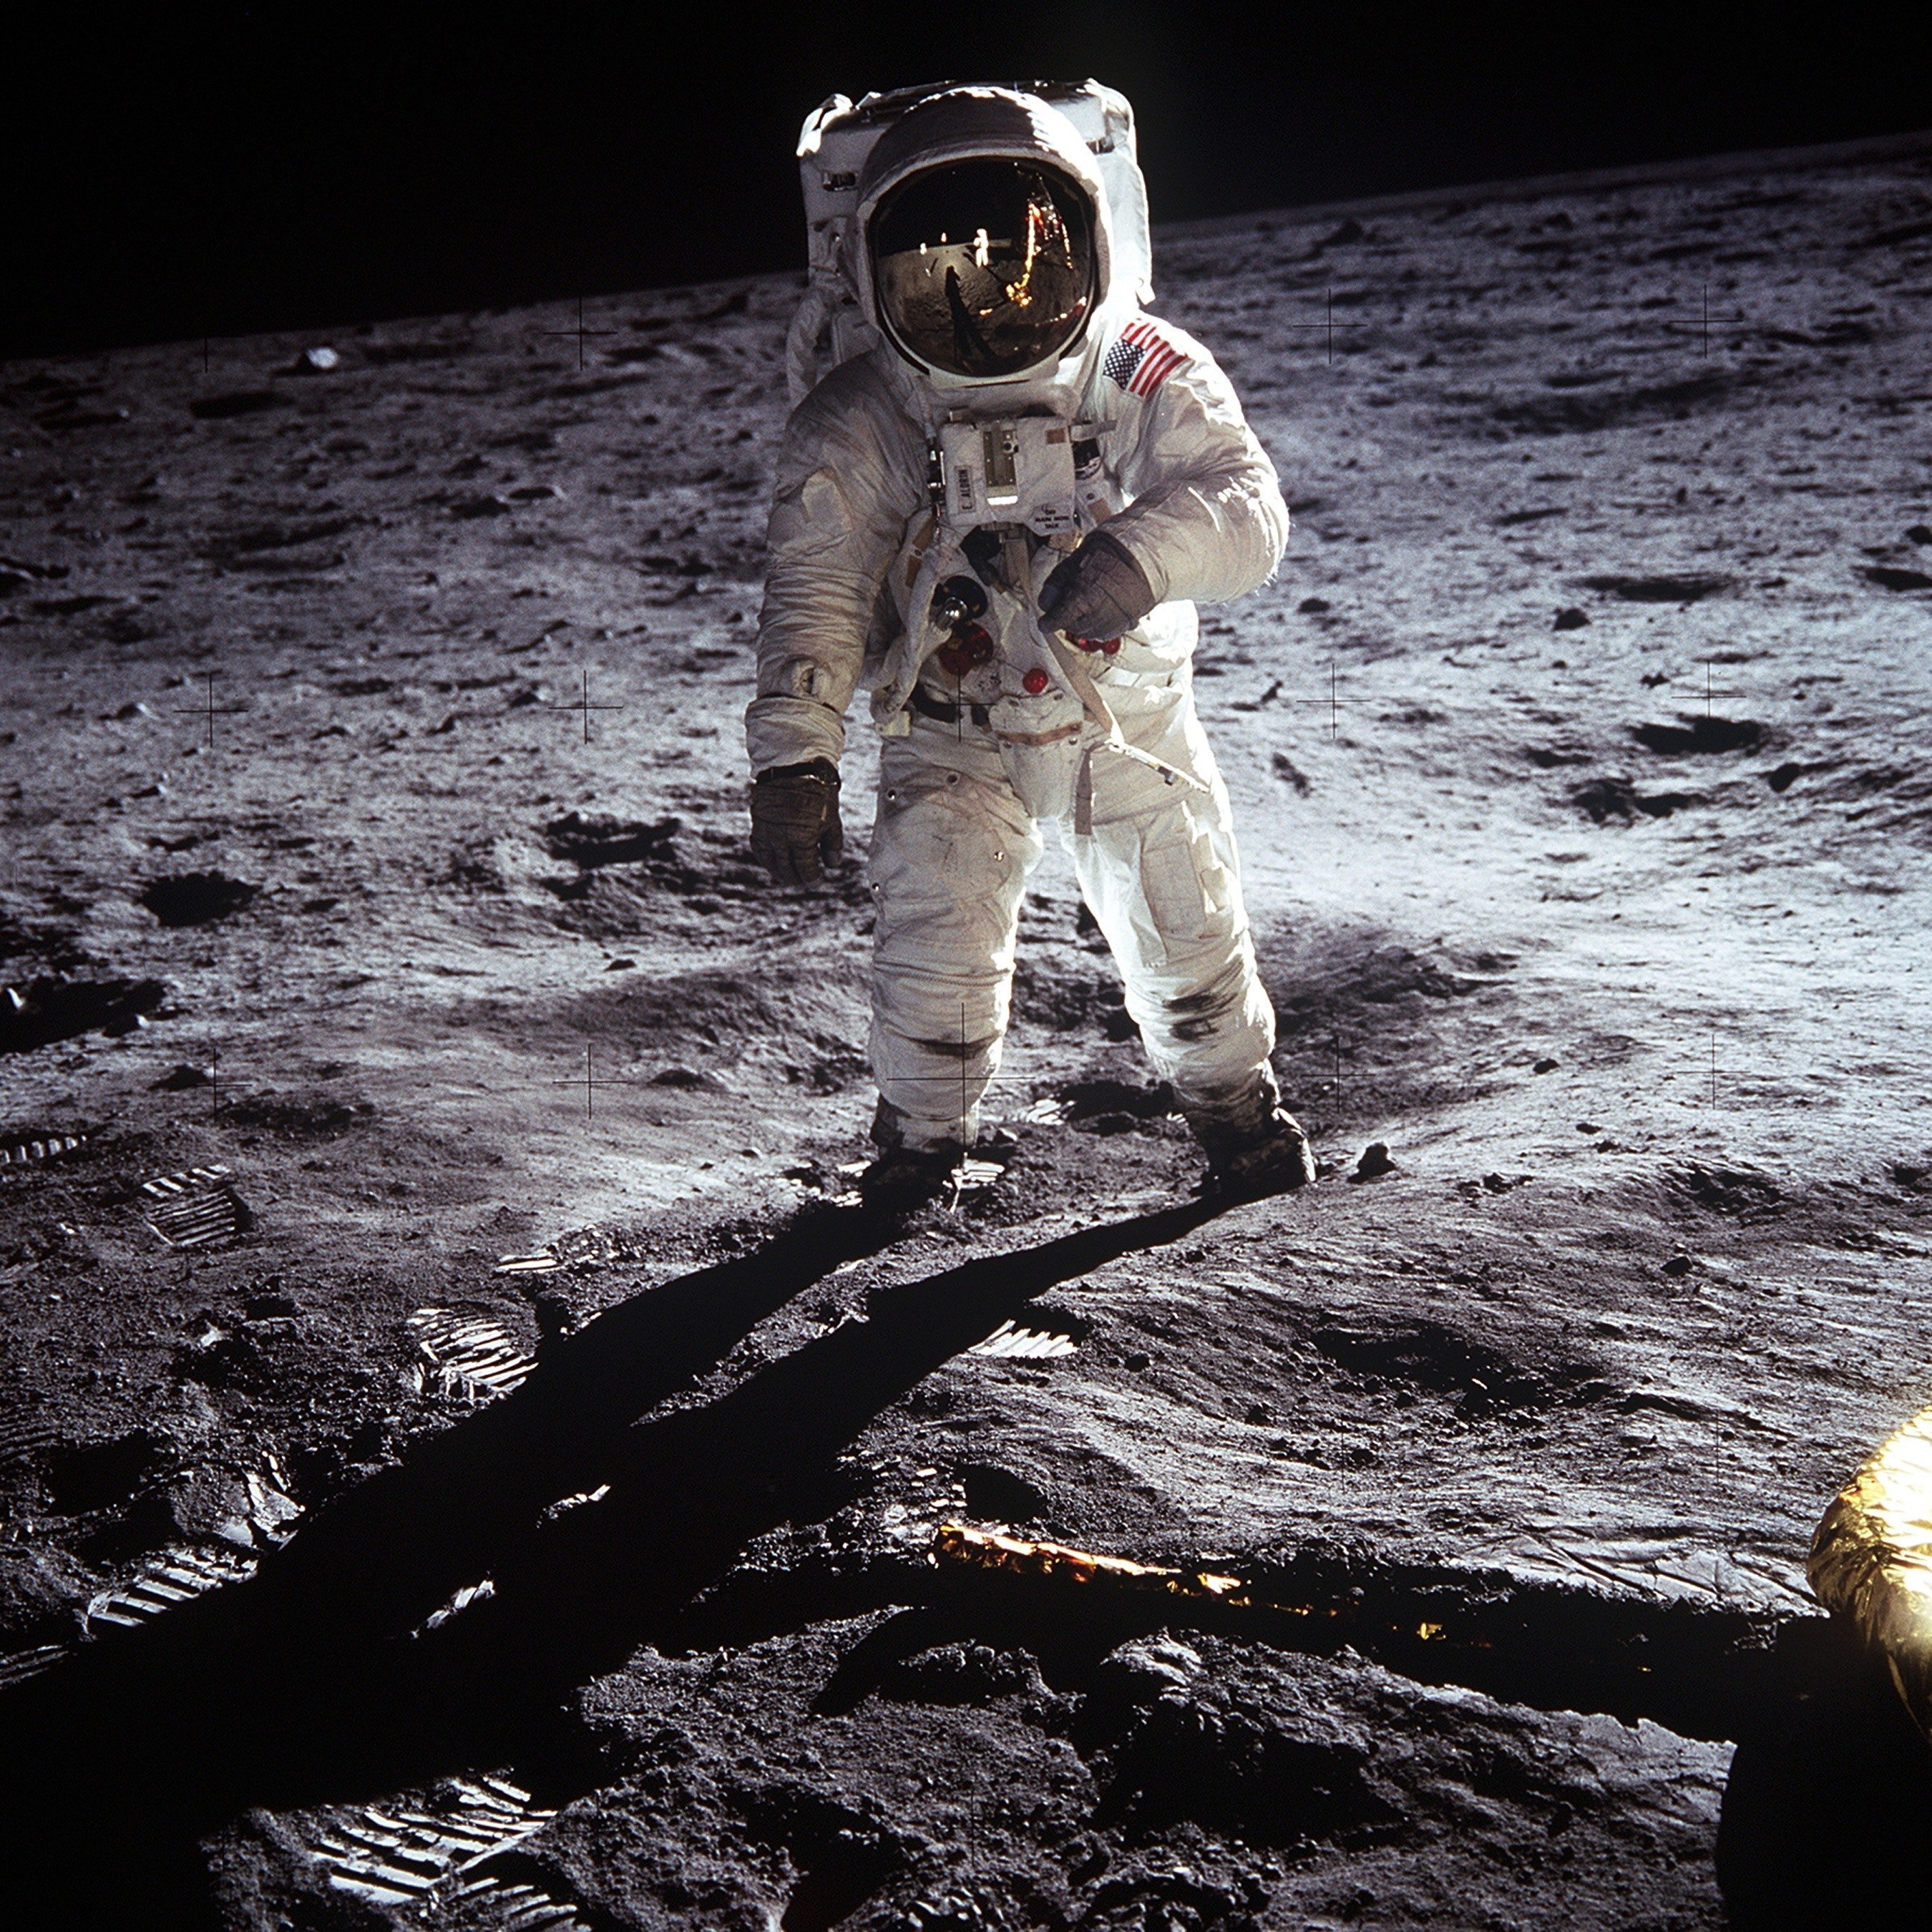 Astronaut lands on the moon. | Source: pexels.com